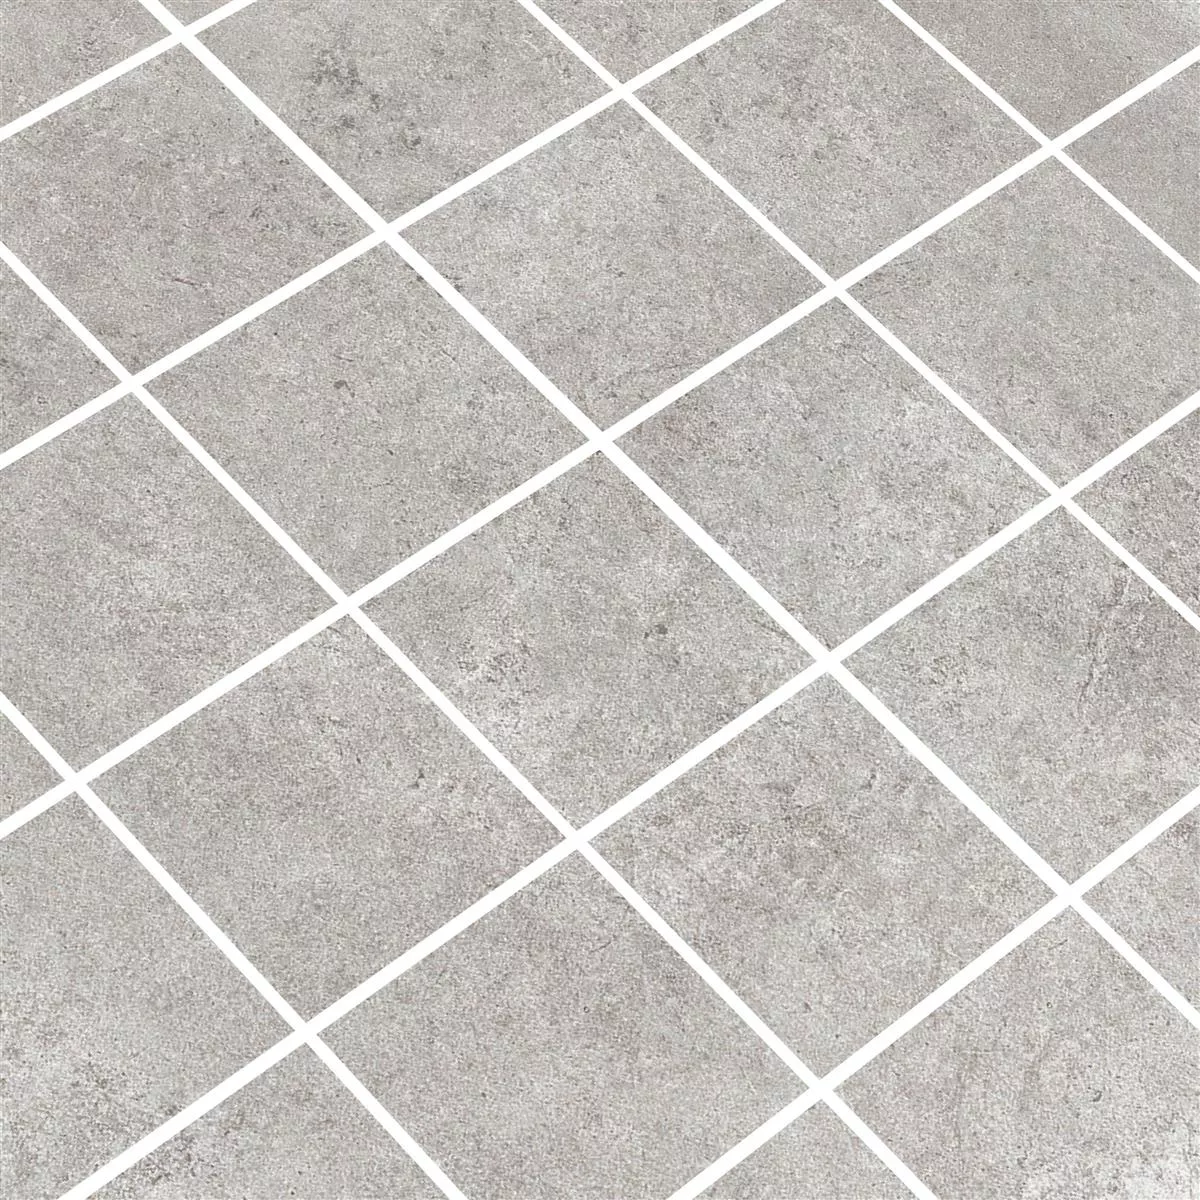 Mozaik Pločice Colossus Cement-Izgled, Imitacija Siva